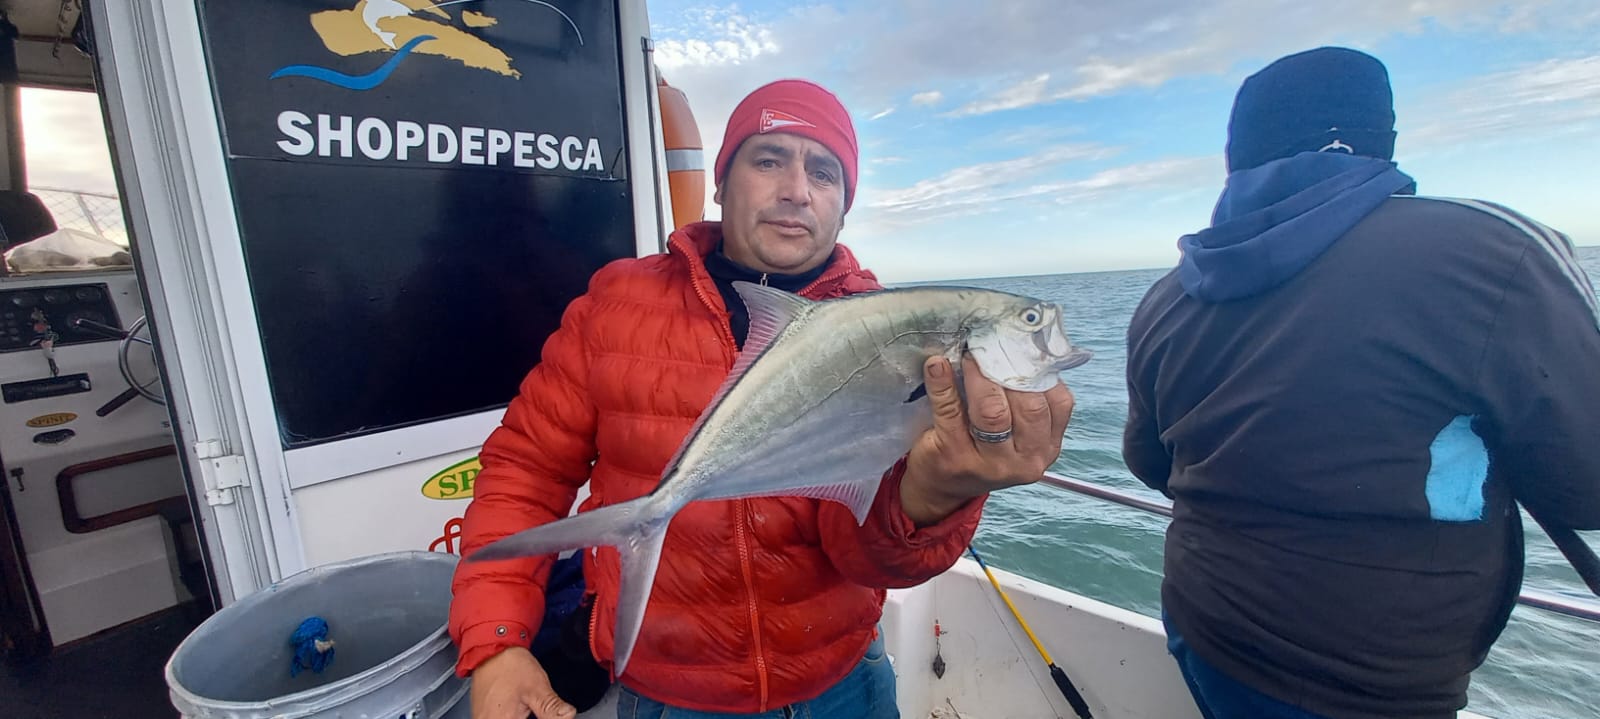 Mar del Plata a pura pesca… Por Cristian Prado – Shop de Pesca